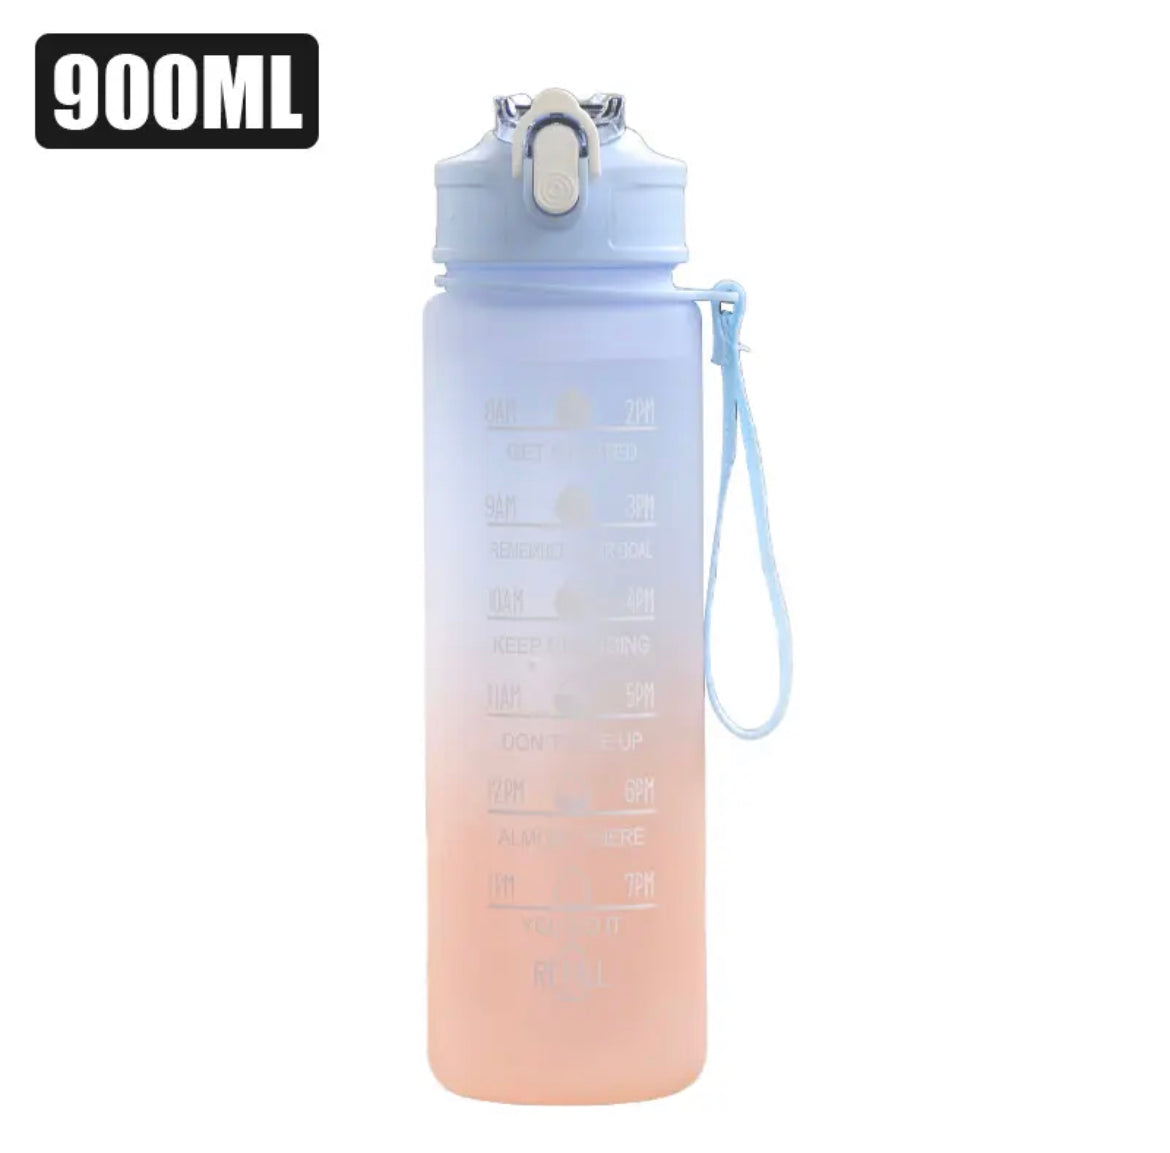 Drikkeflaske - 0,9 liter - Motivasjonsflaske